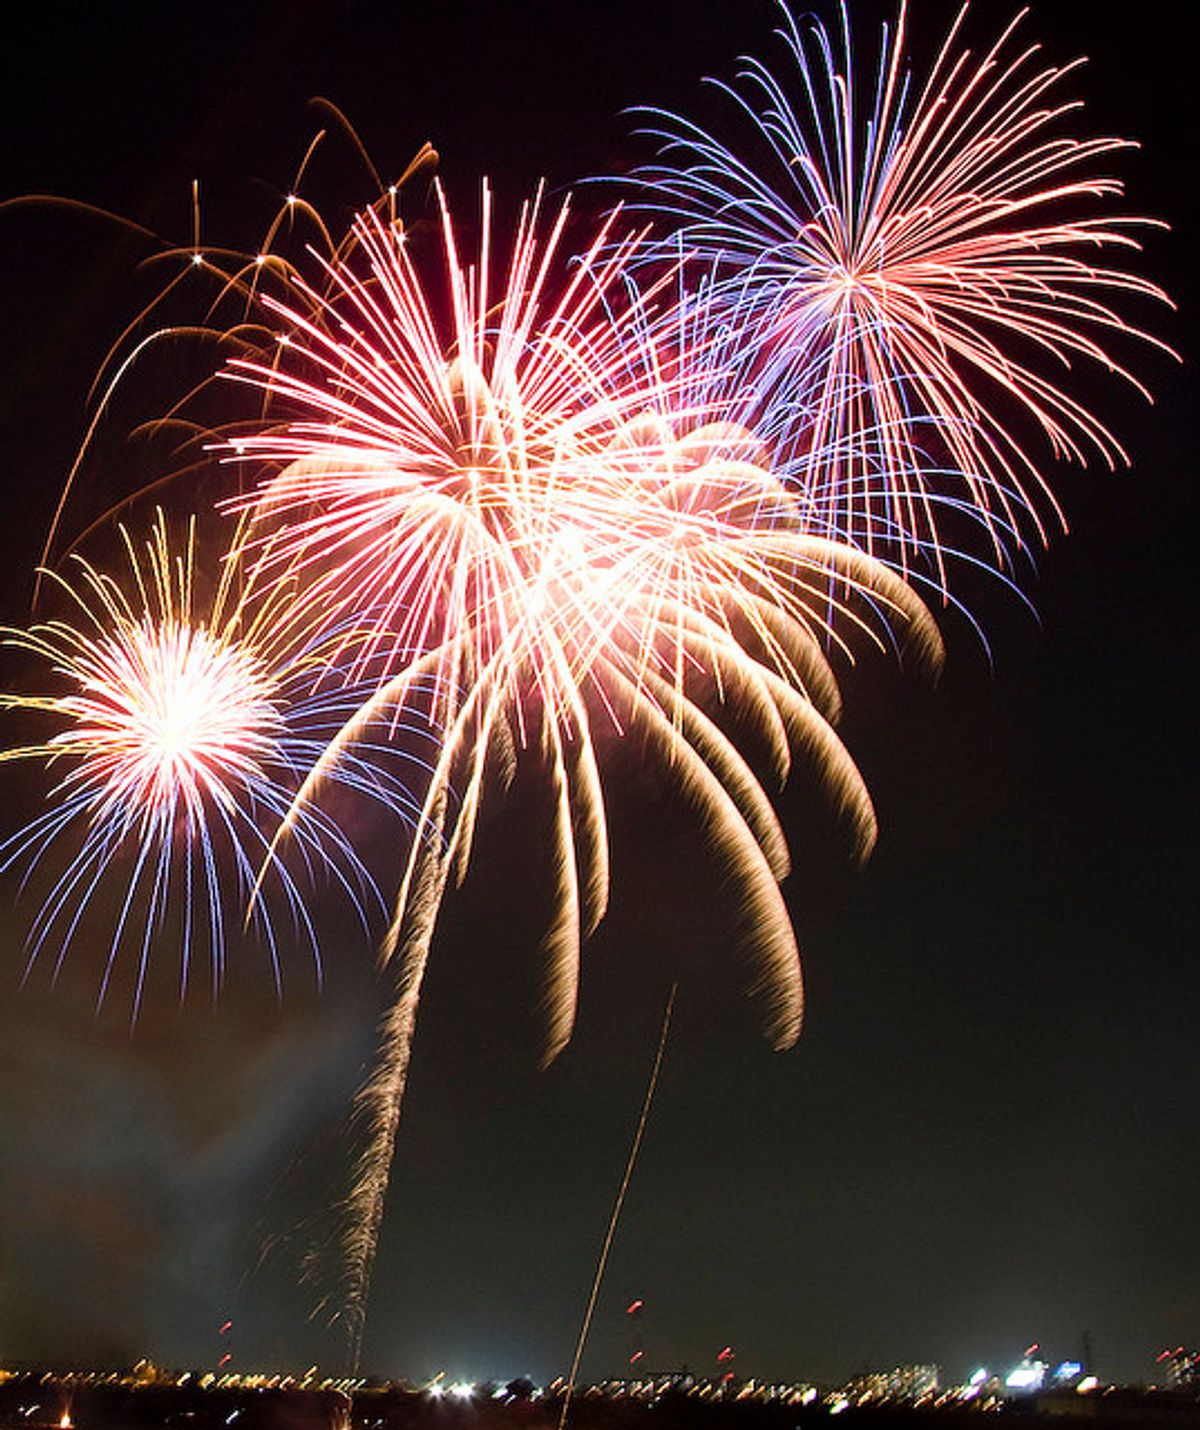 Fireworks (bayasaa on Flickr)